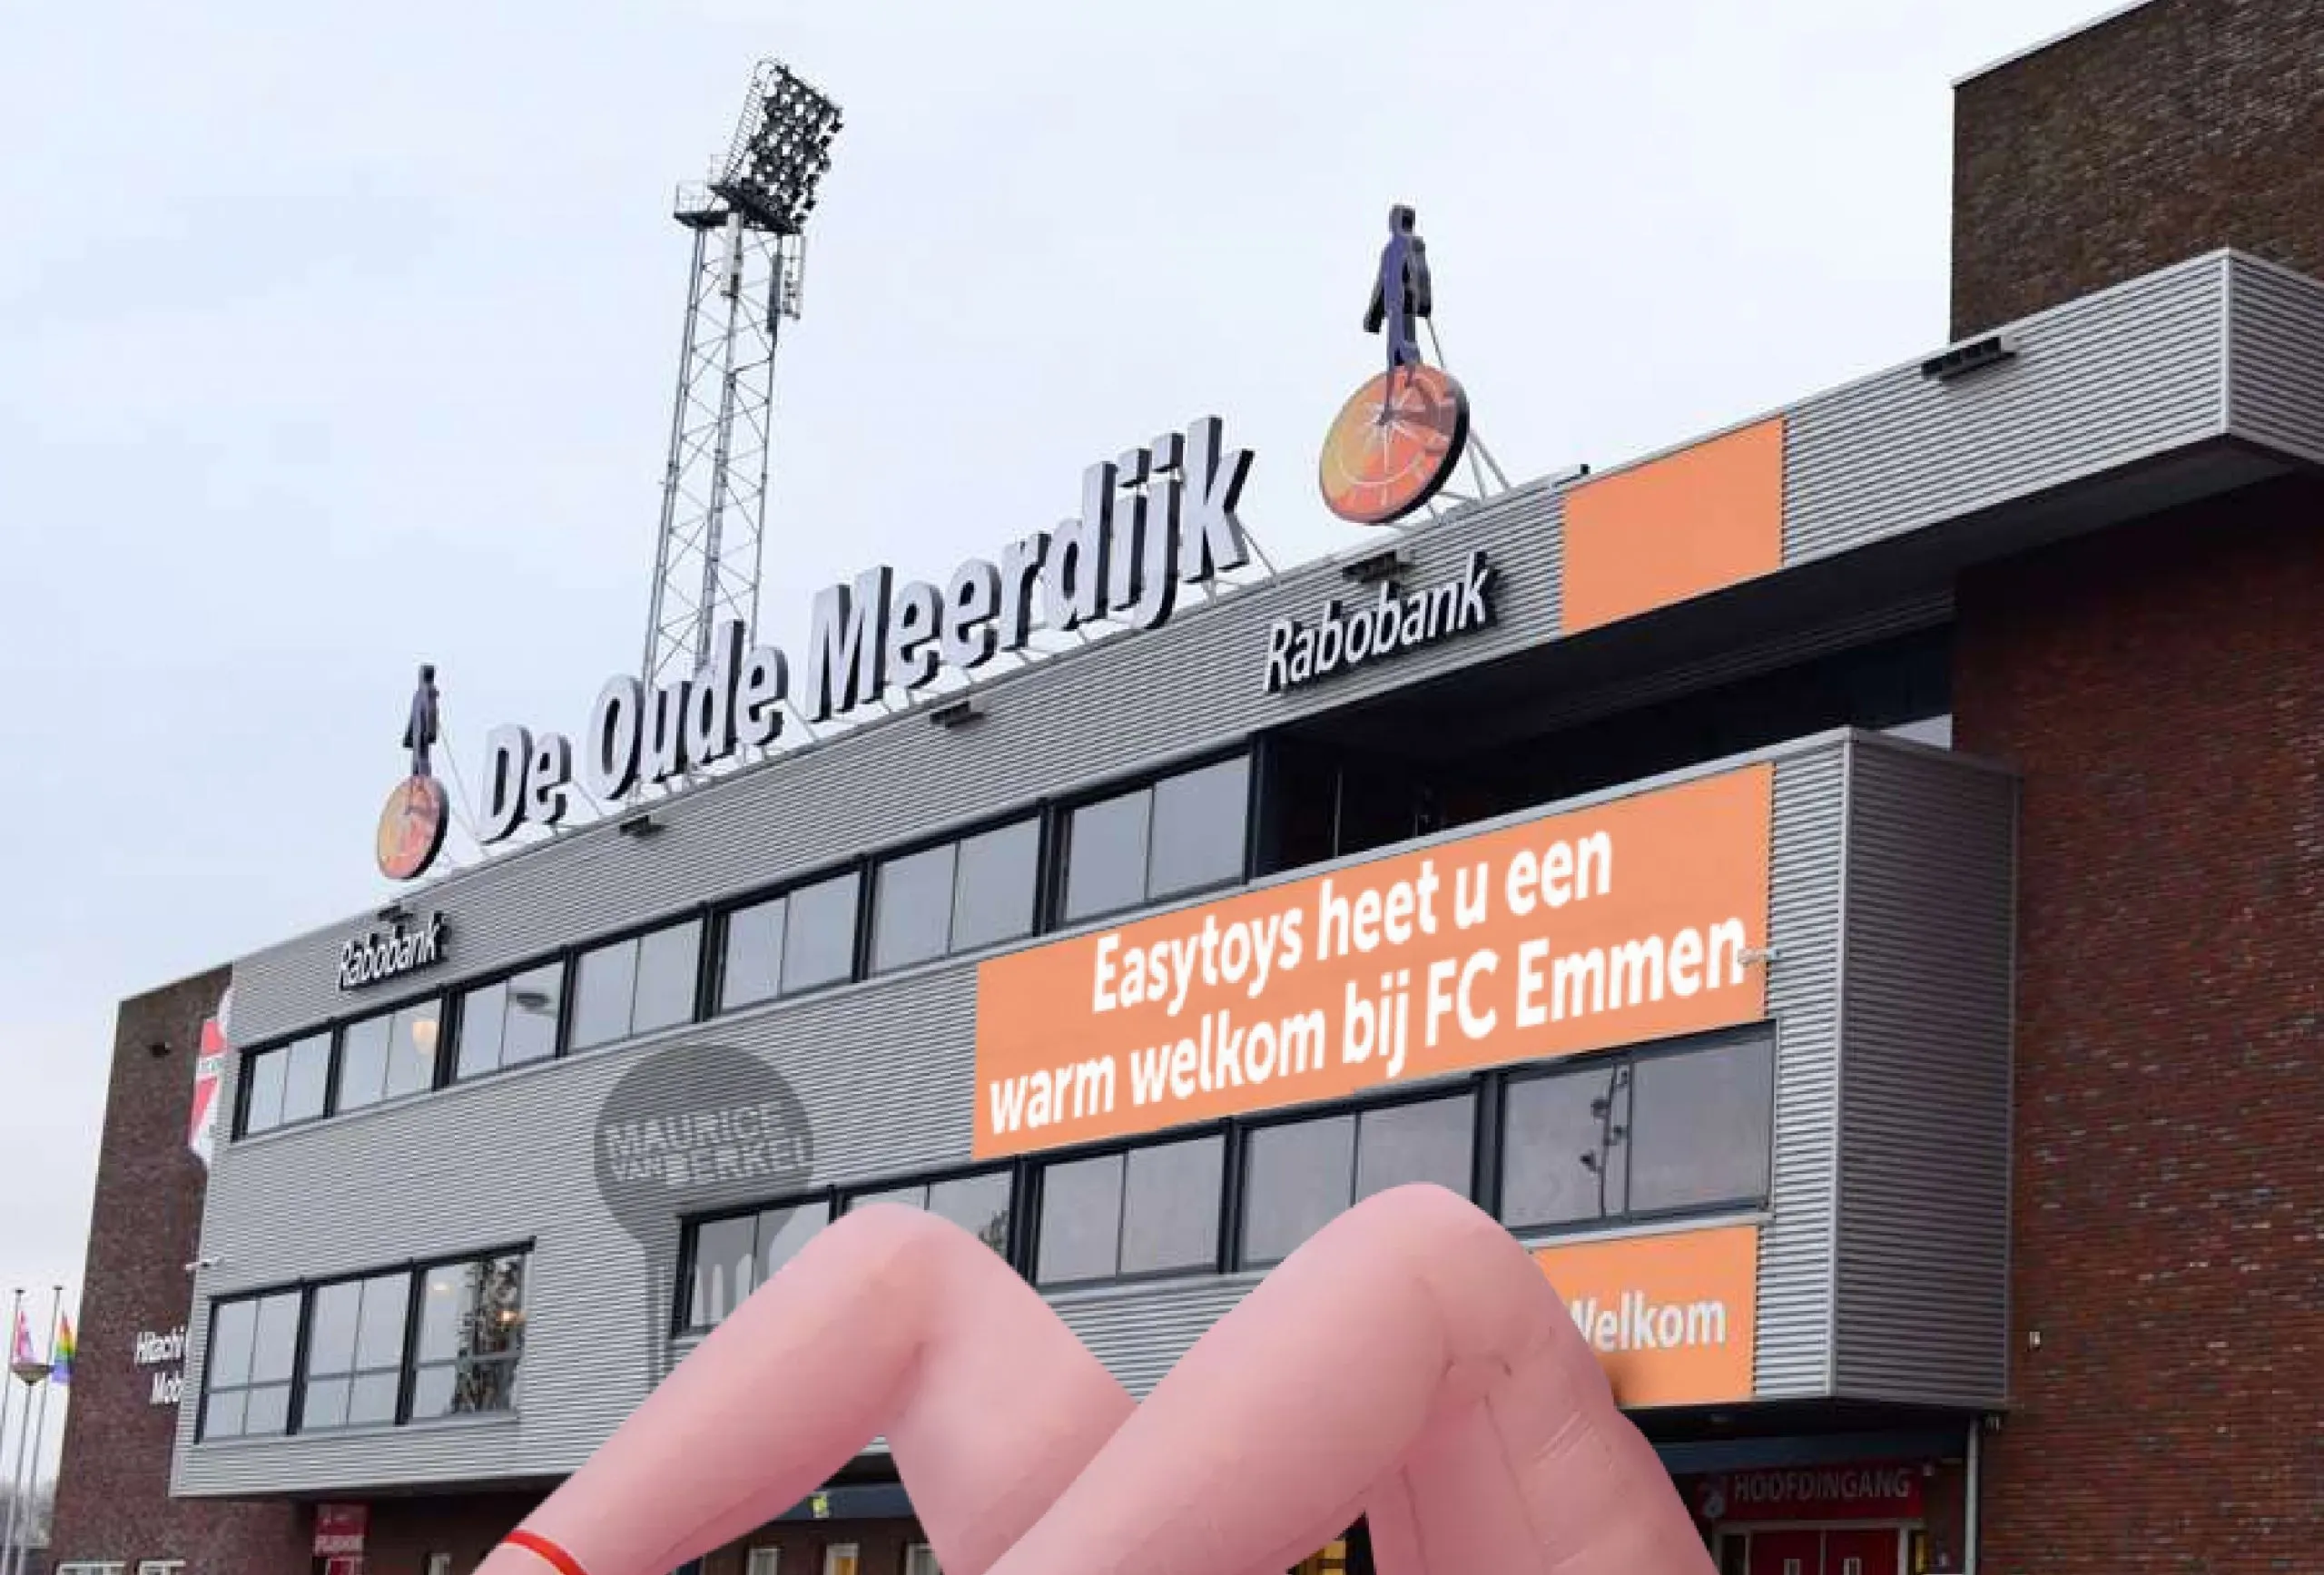 New sponsors EasyToys arrange for an x-rated welcome for FC Emmen fans